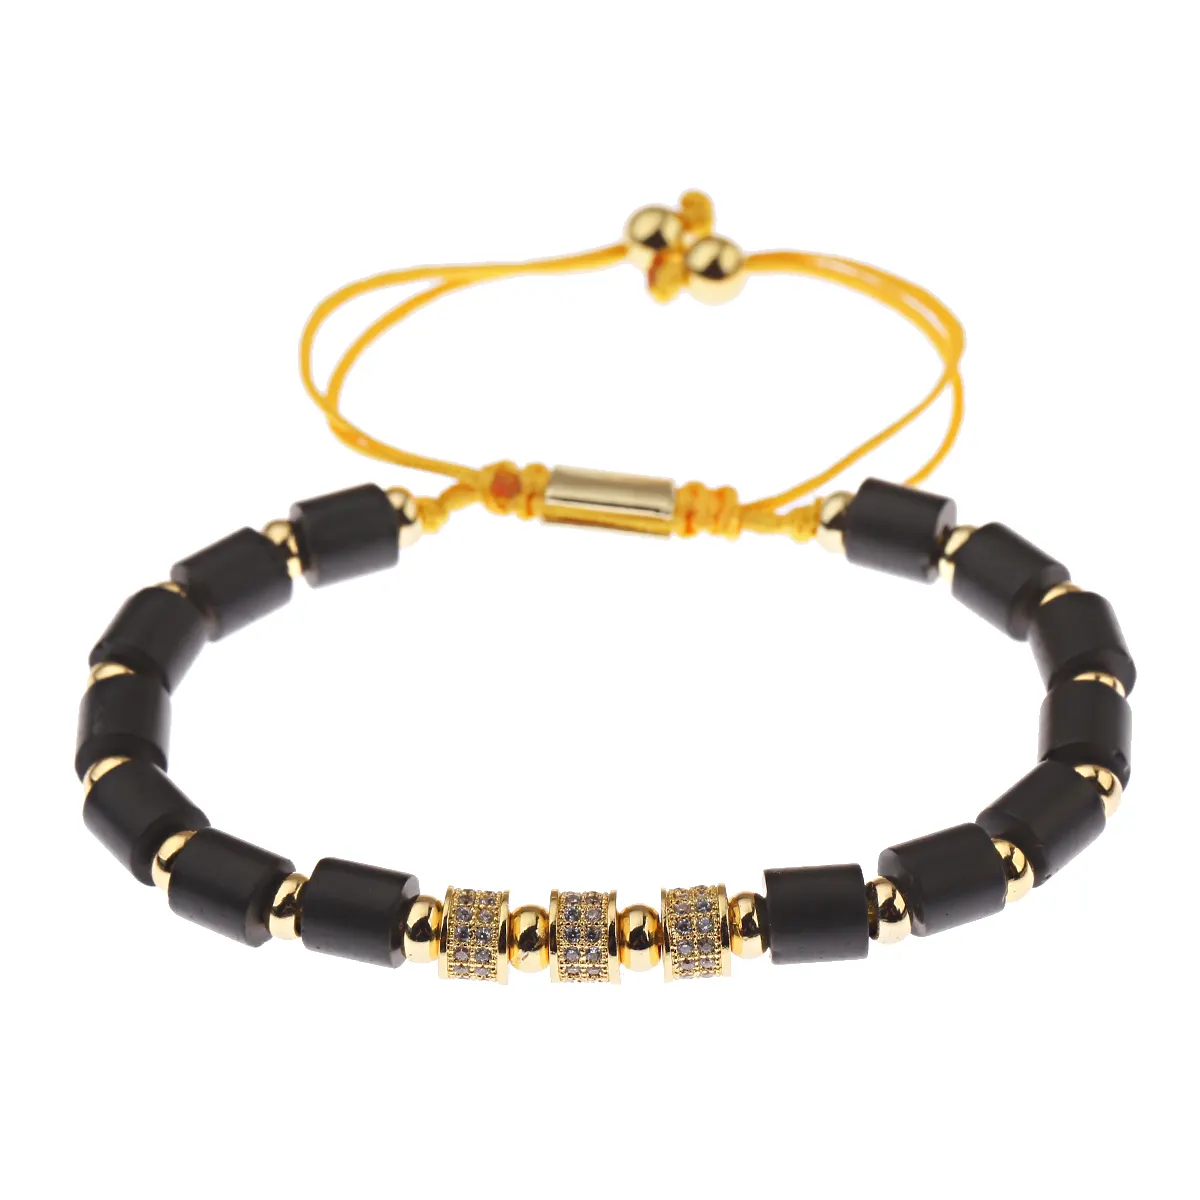 Fashion Metal Beads Braided Bracelet Healing Balance Prayer Natural Bracelet For Men Women Jewelry